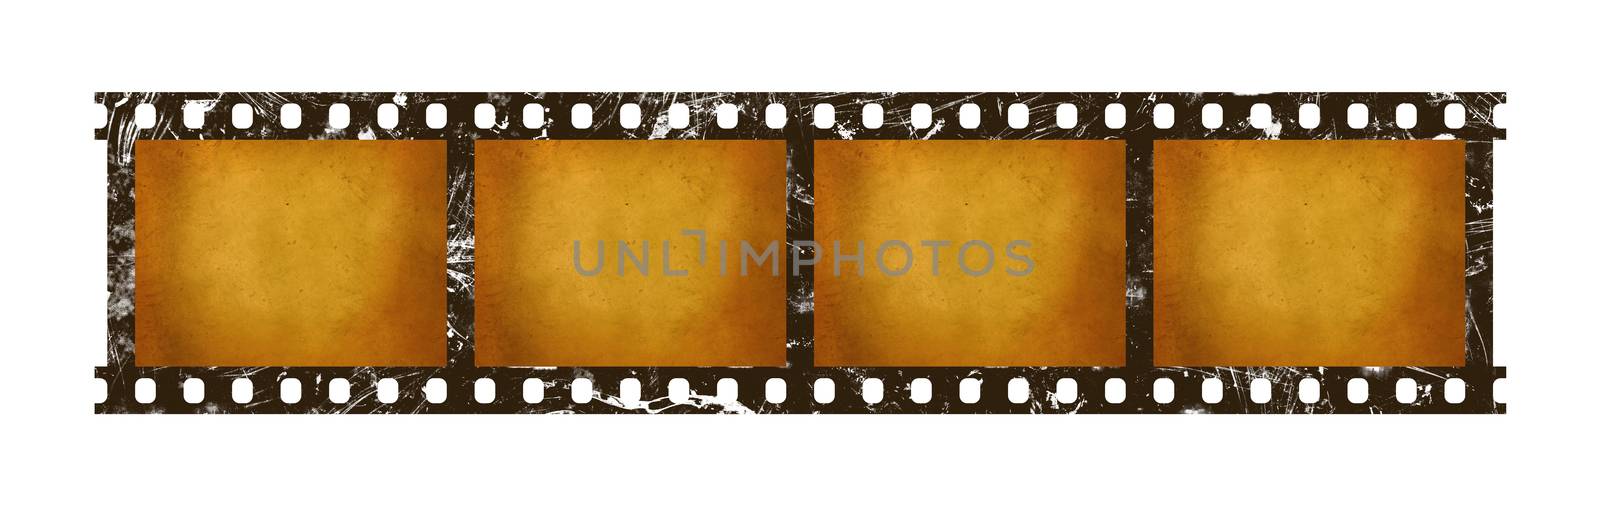 Old vintage retro 35 mm film strip frames by BreakingTheWalls